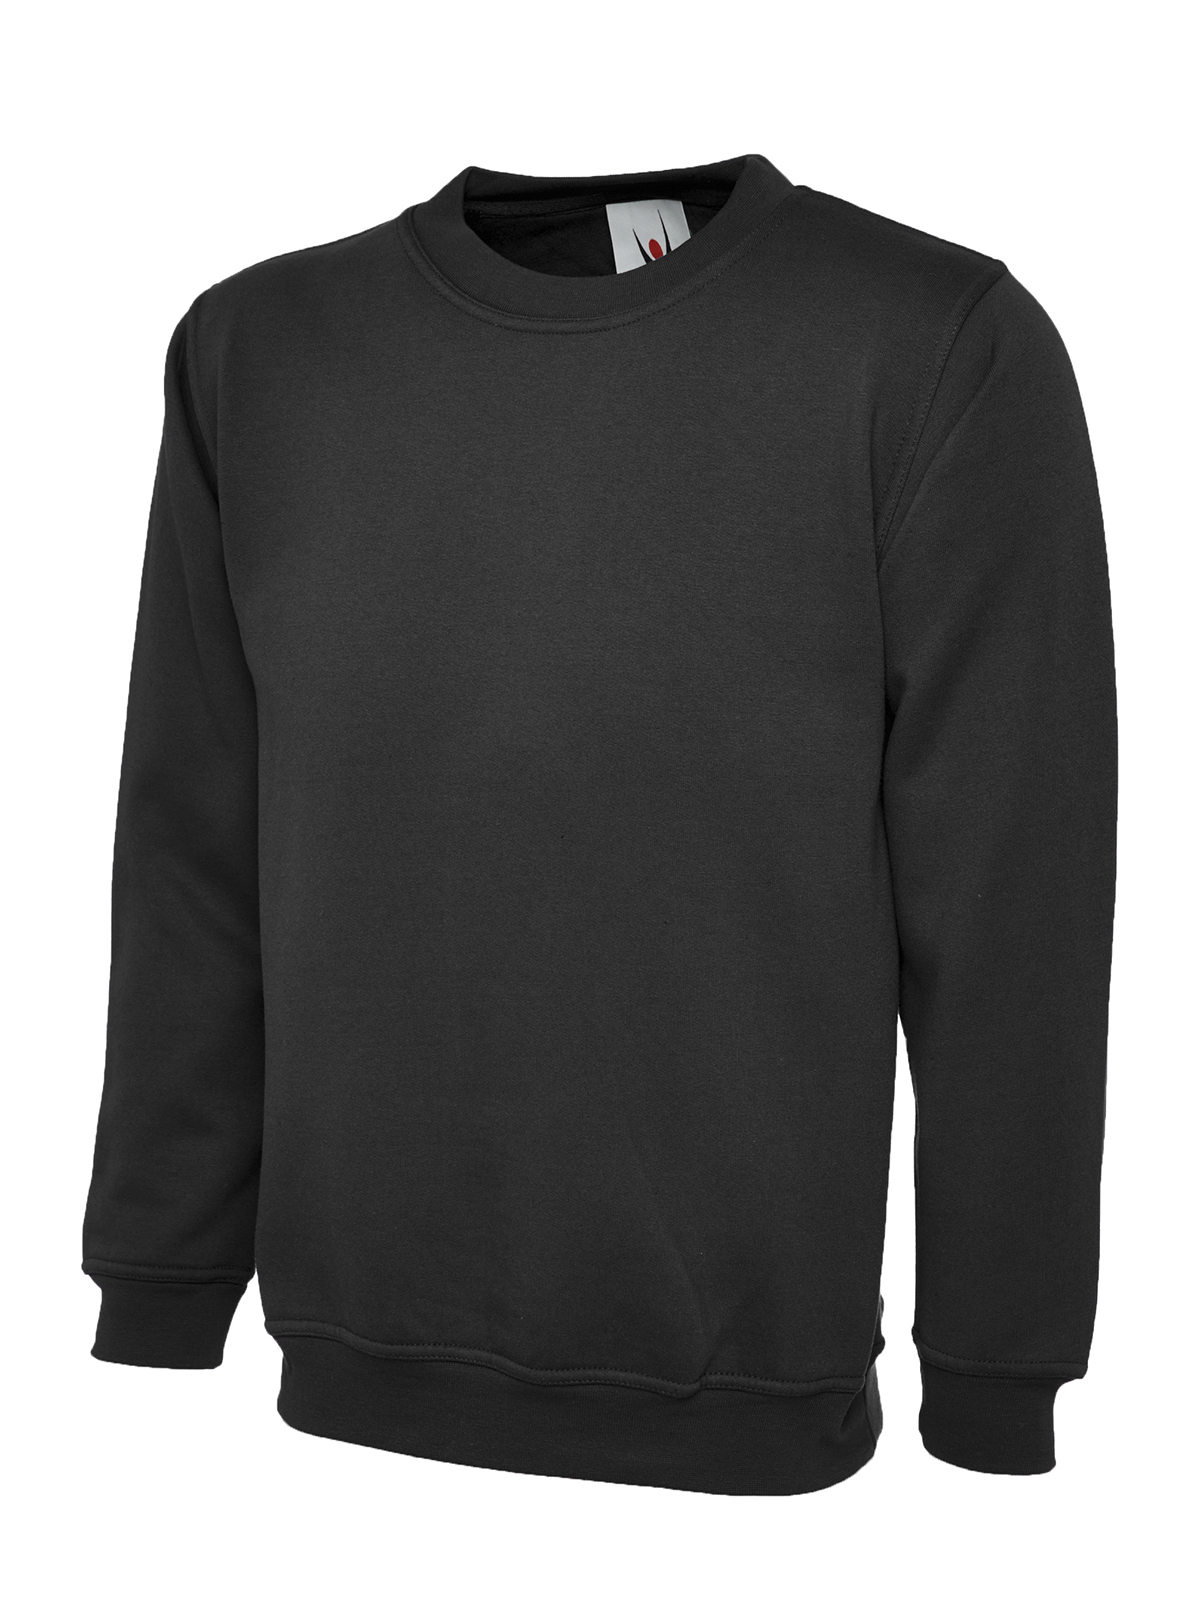 Uc203 300gsm classic sweatshirt - black - xl